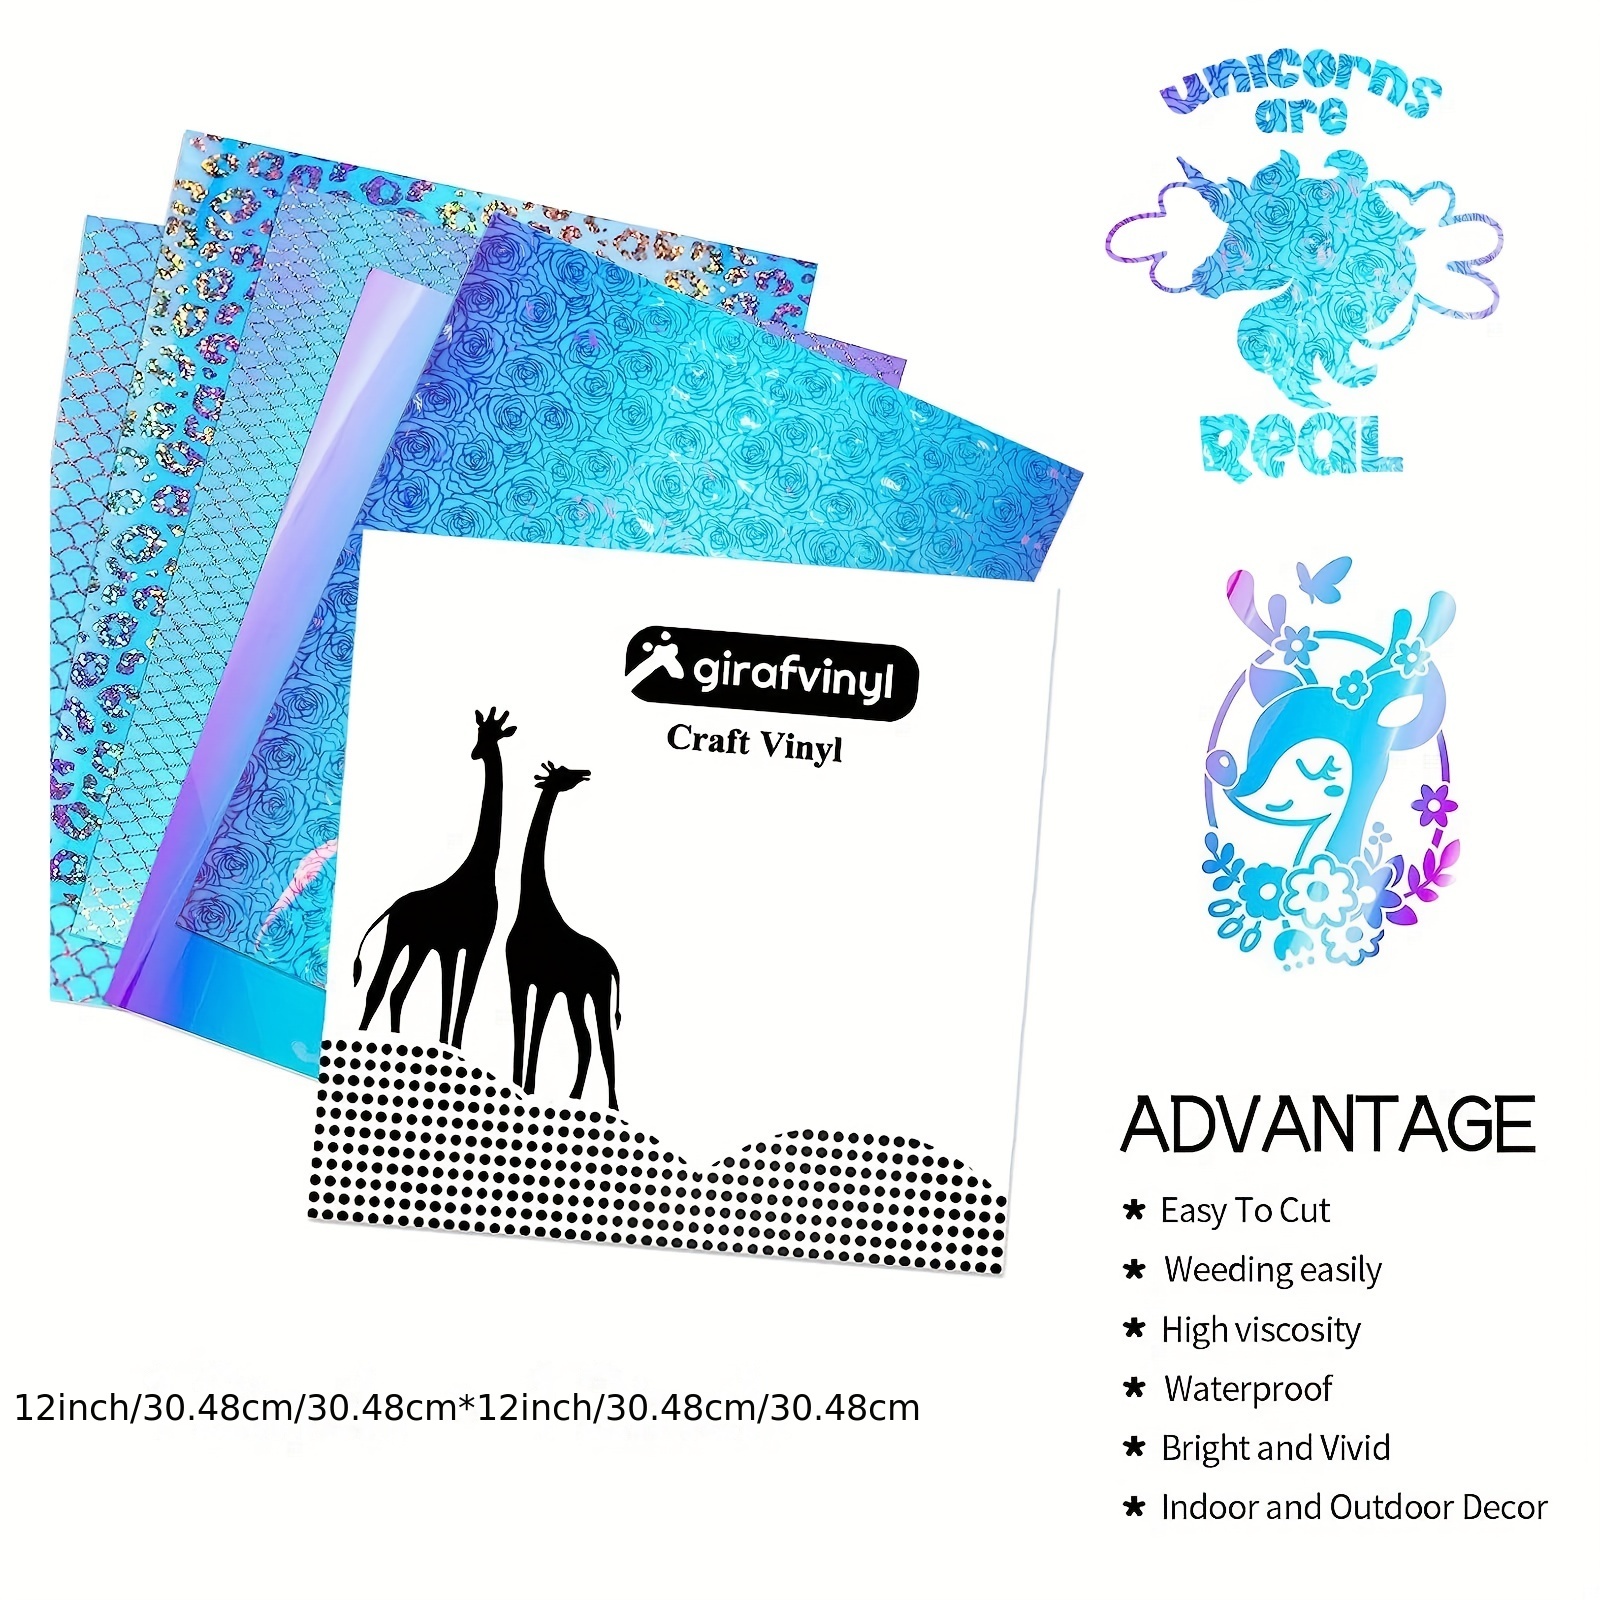 Lya Vinyl 70 Packs Permanent Vinyl Bundle, Glossy & Holographic, Self  Adhesive Vinyl Sheets for Cricut & Silhouette 